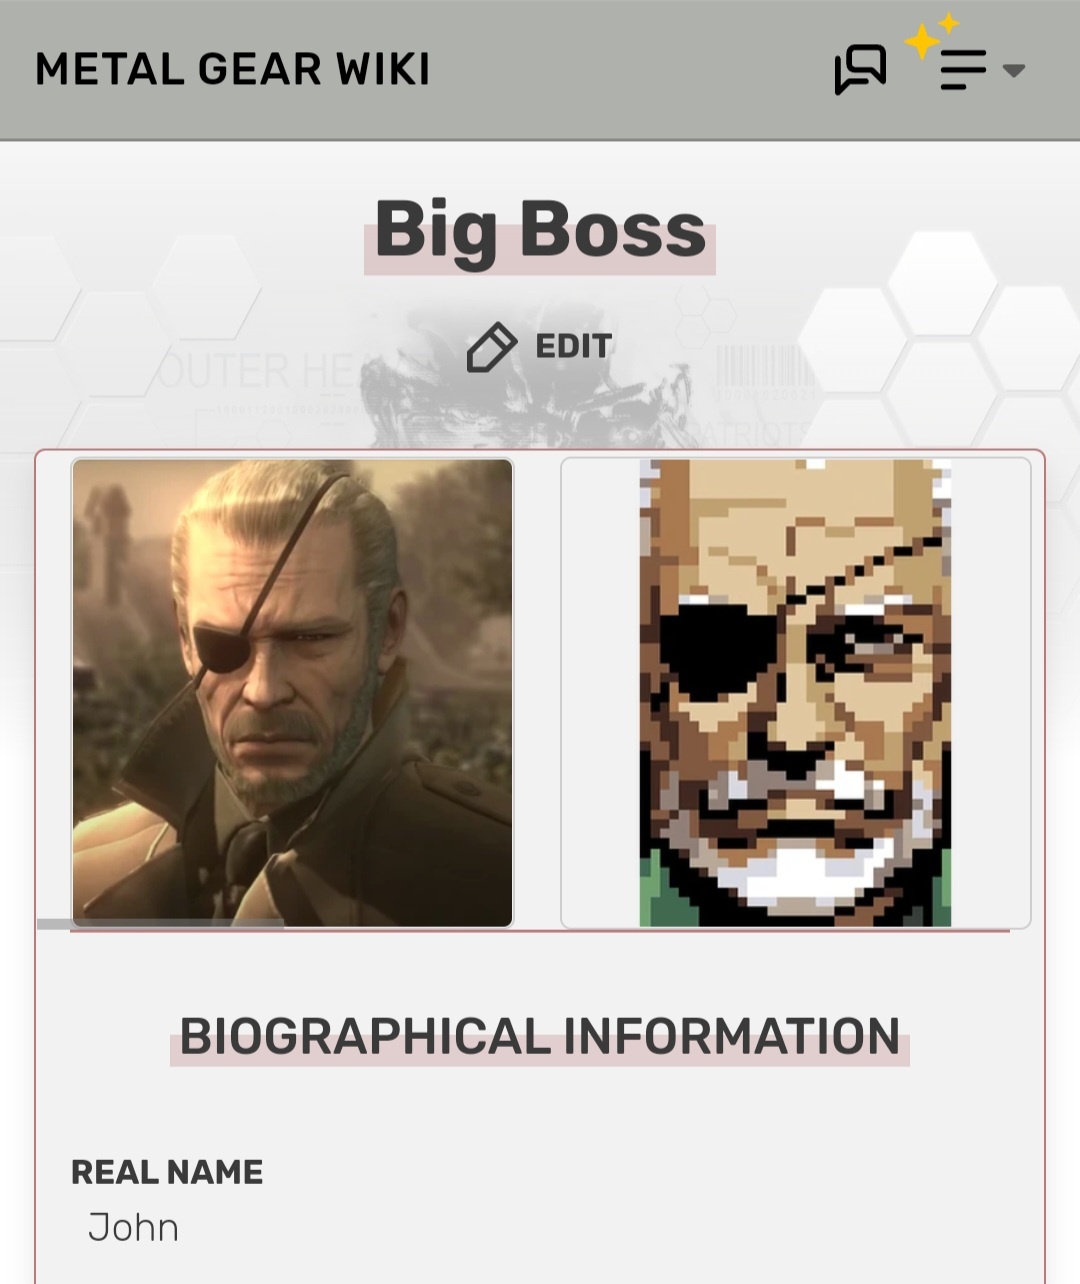 Is Big Bosses name really John Doe? Or is Kojima making a joke